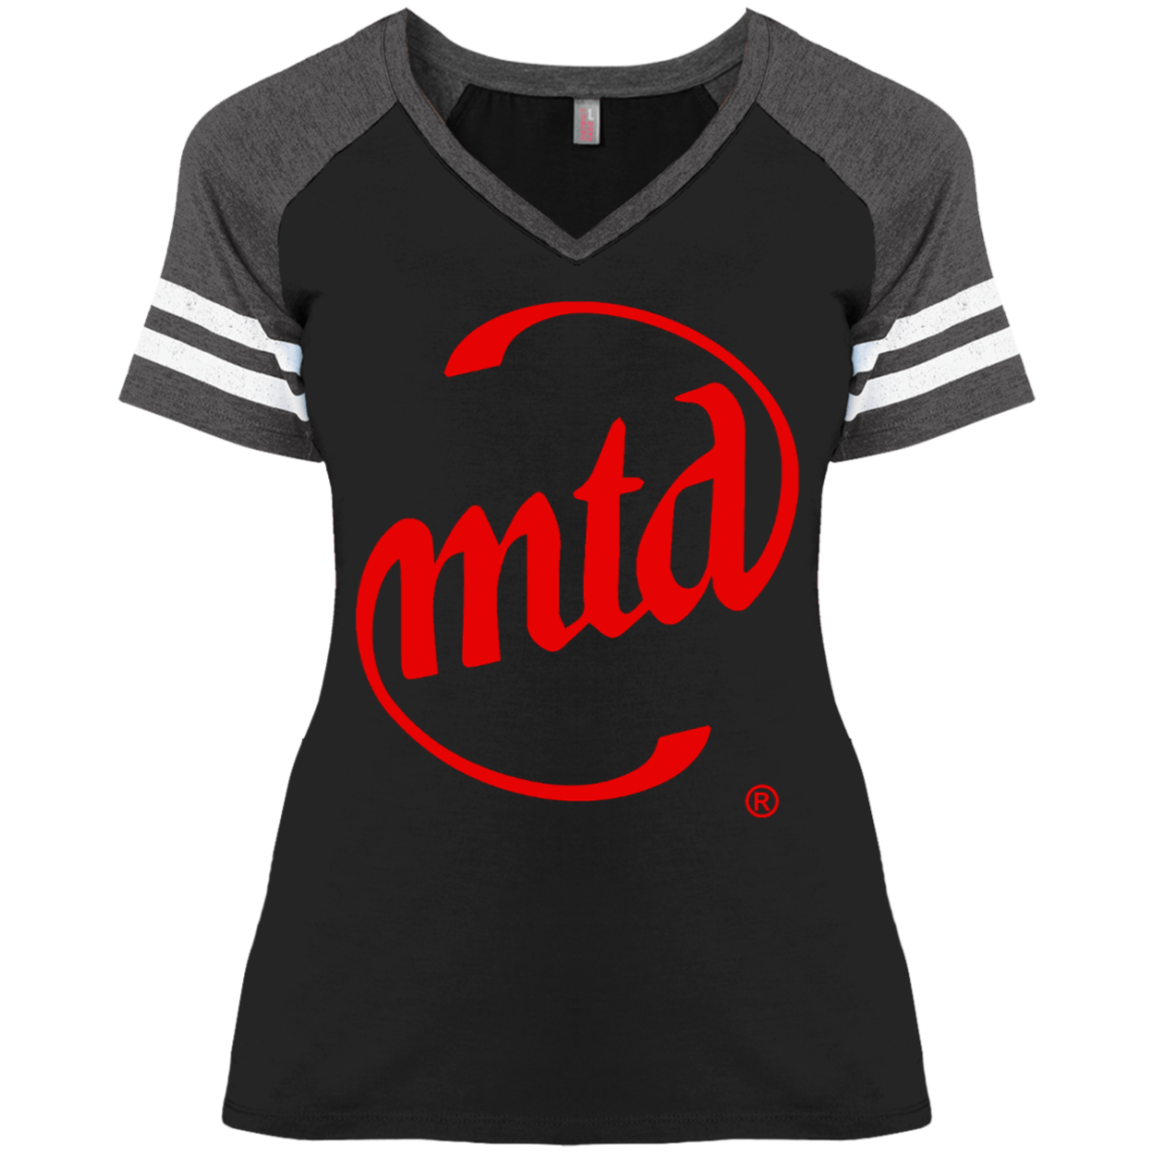 MTD RED LOGO Ladies' Game V-Neck T-Shirt